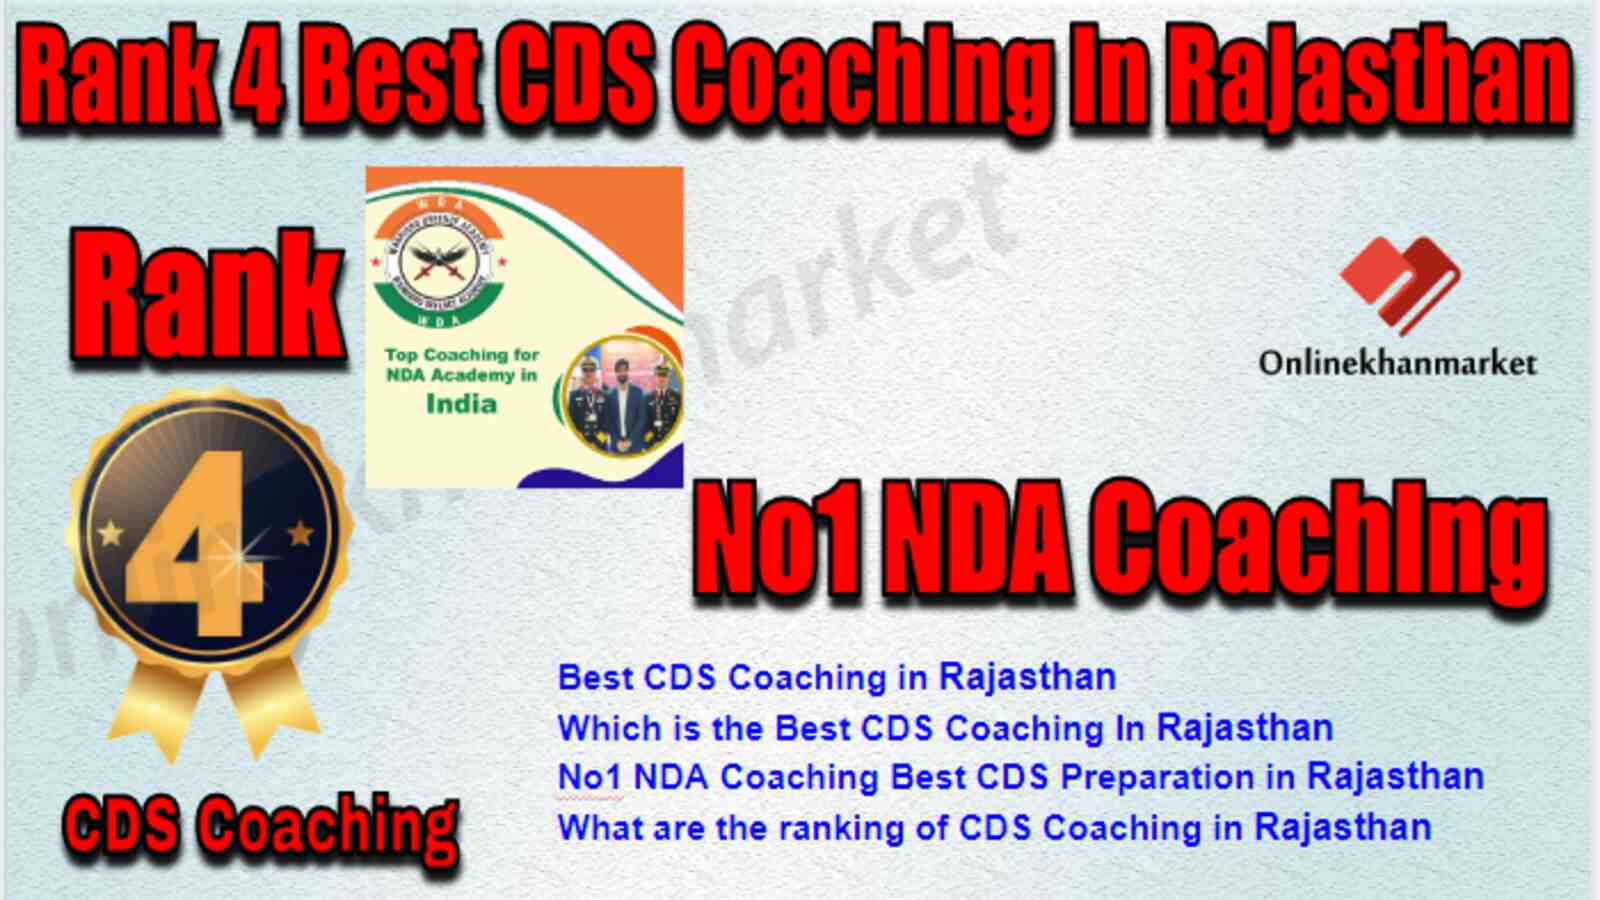 Rank 4 Best CDS Coaching in Rajasthan